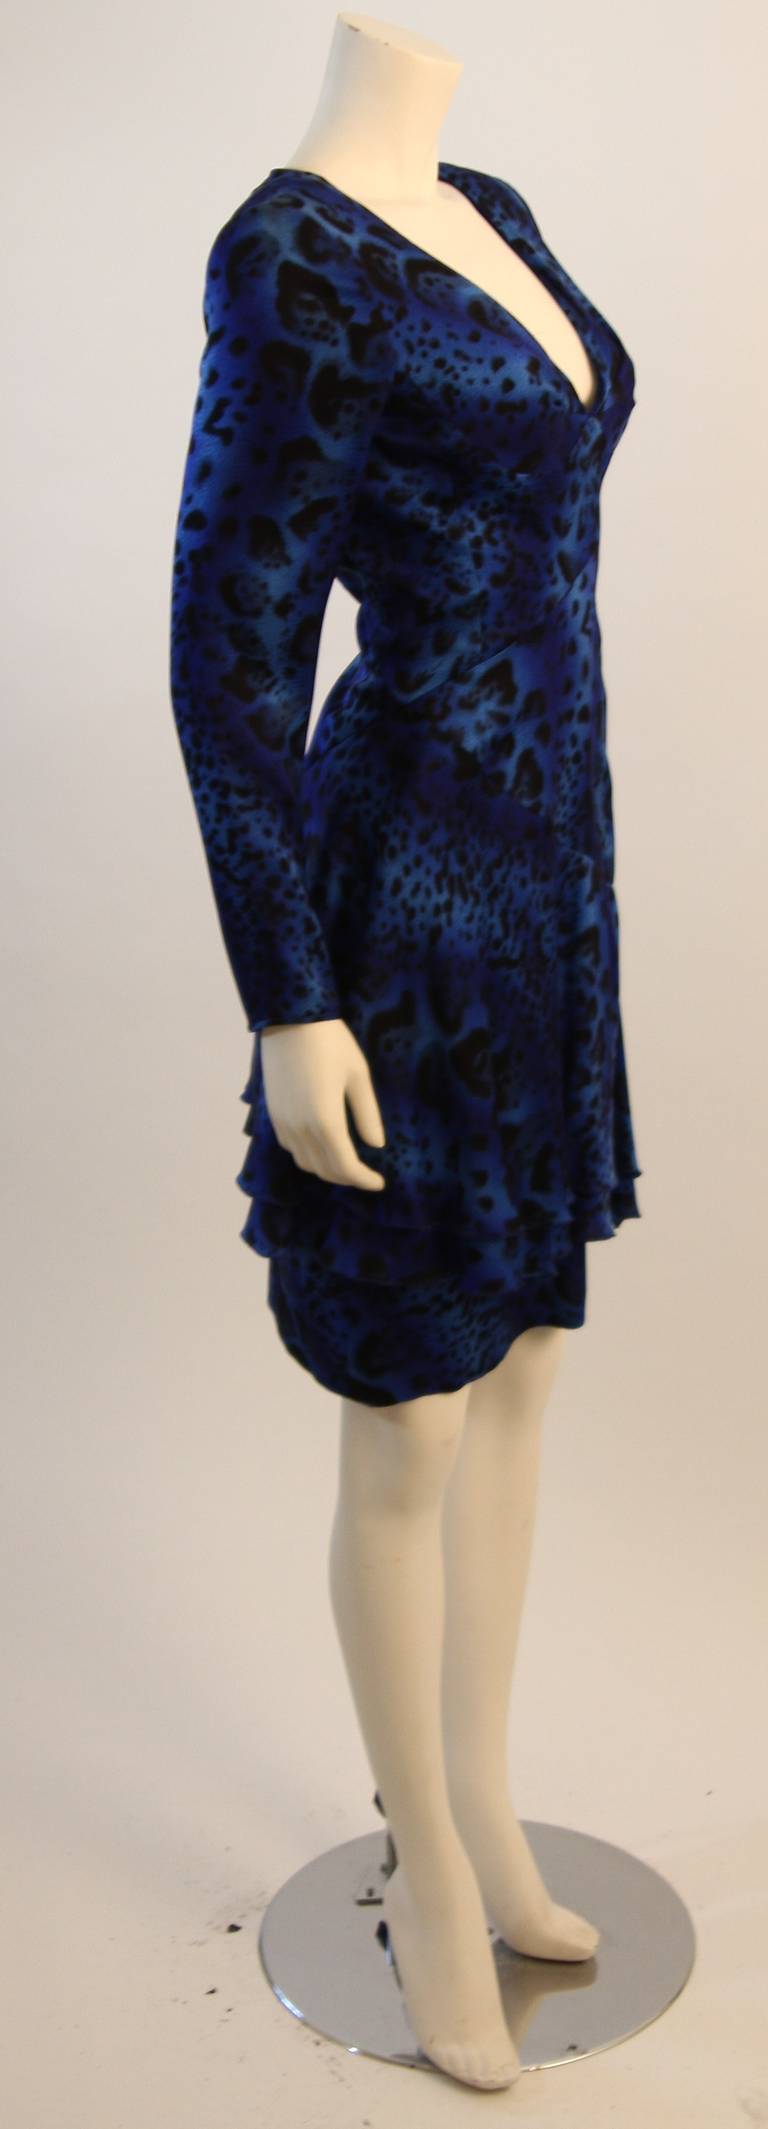 Emanuel Ungaro Rich Blue Abstract Animal Print Dress Size 8 1